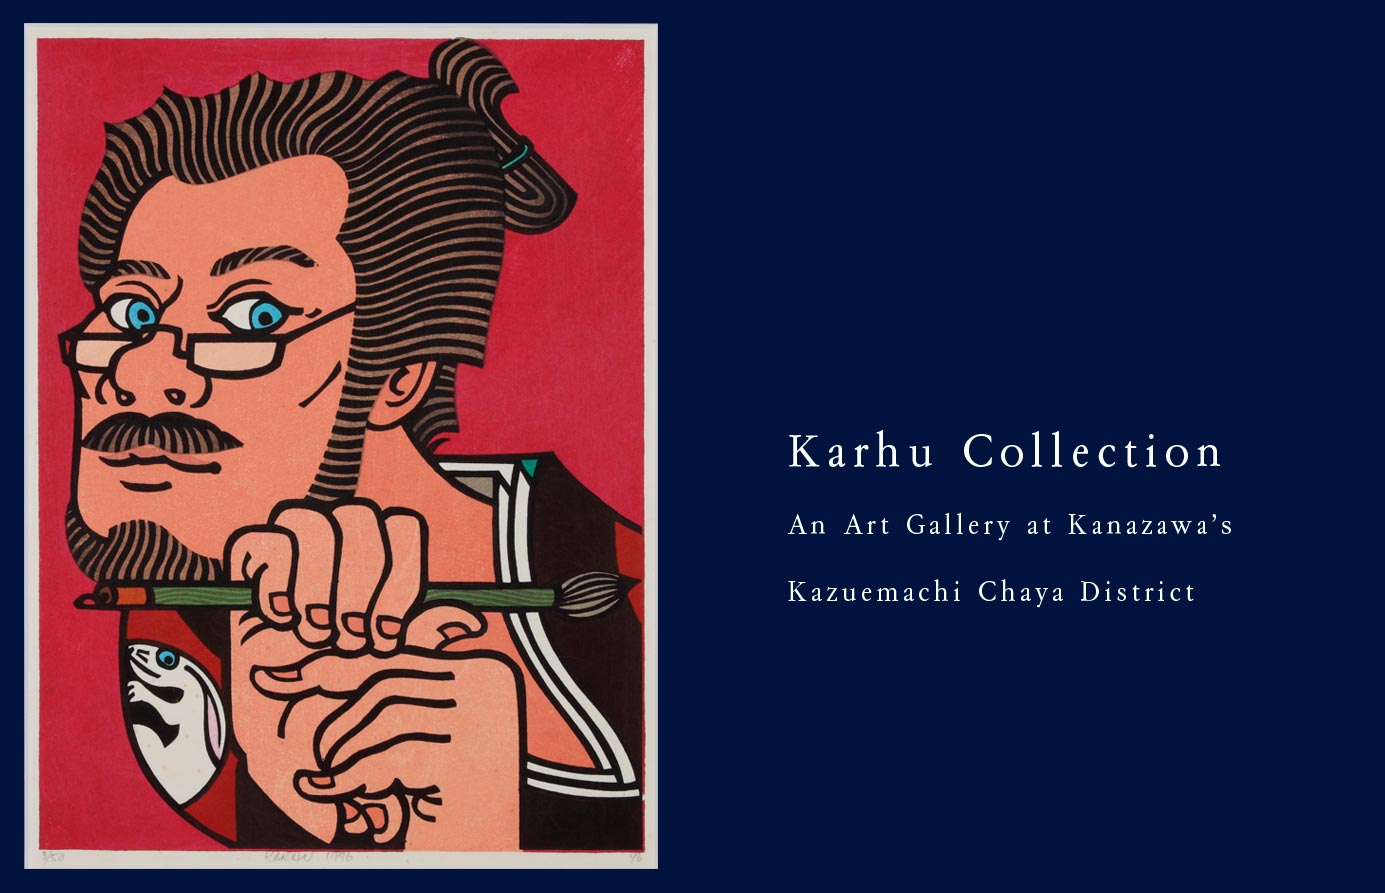 woodblock print artist, Clifton W. Karhu, who always held Kanazawa dear to his heart. | Karhu Collection, an Art Gallery at Kanazawa’s Kazuemachi Chaya District